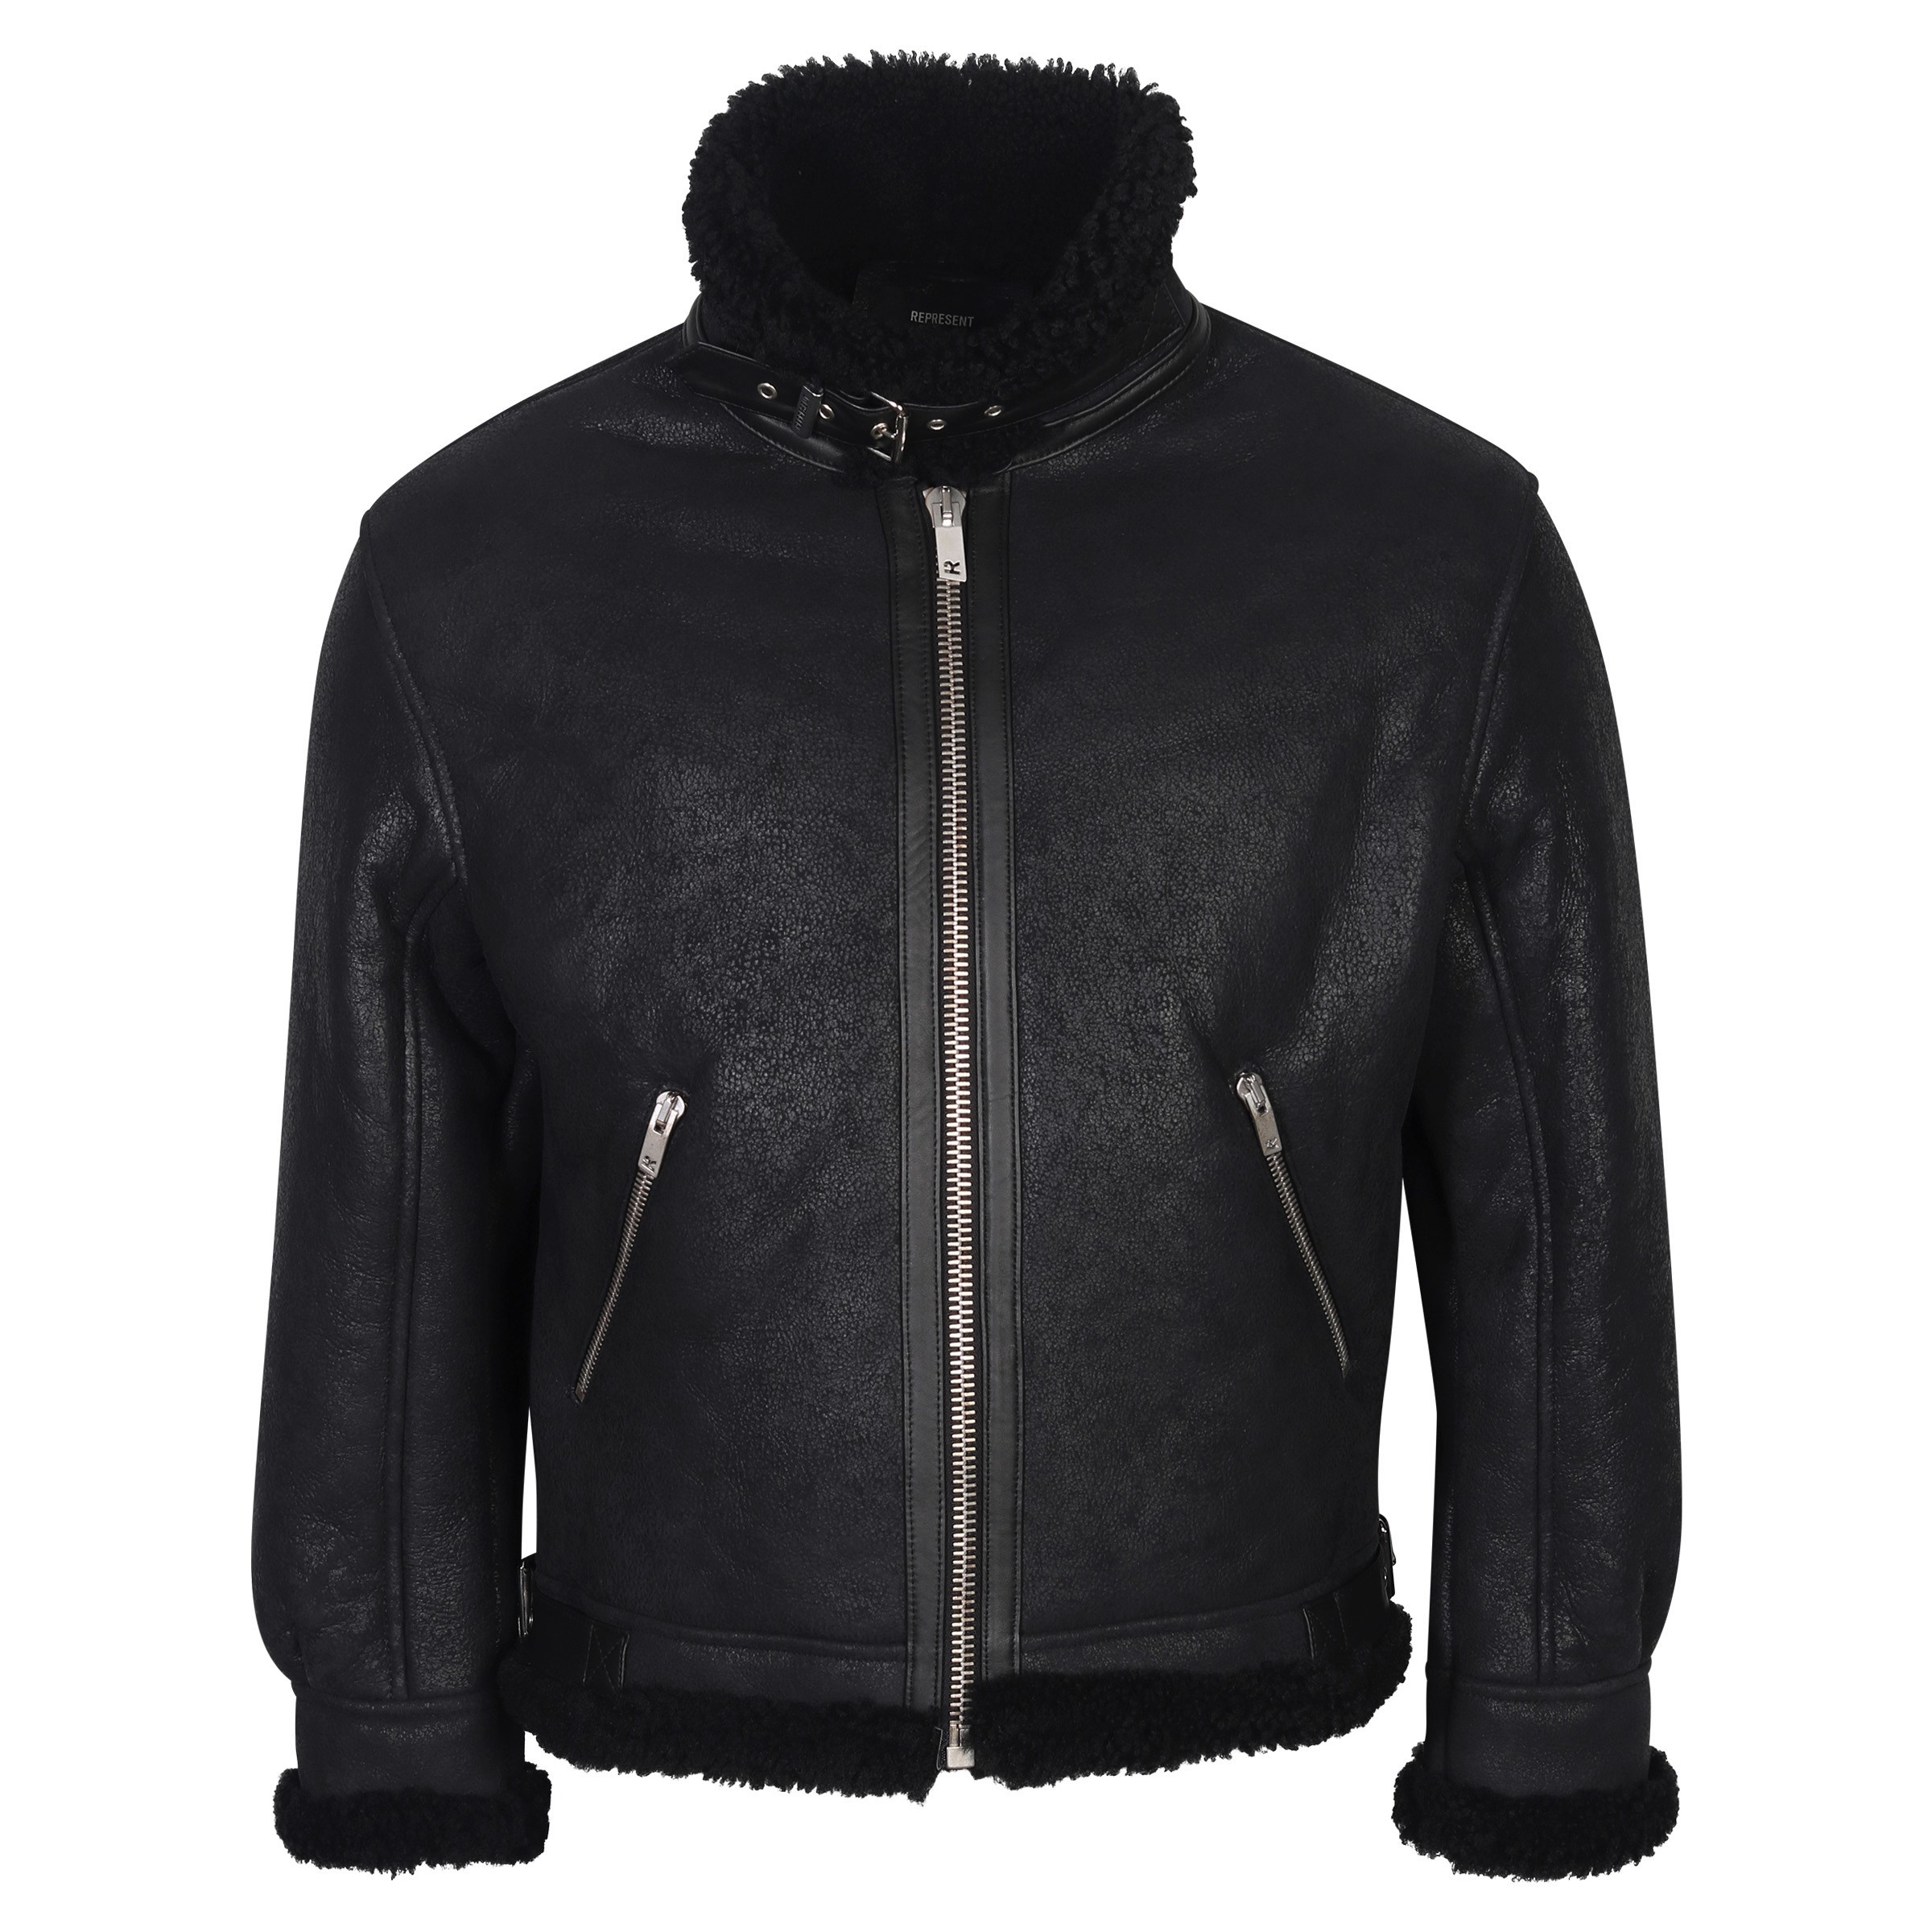 Represent Shearling Jacket in Black